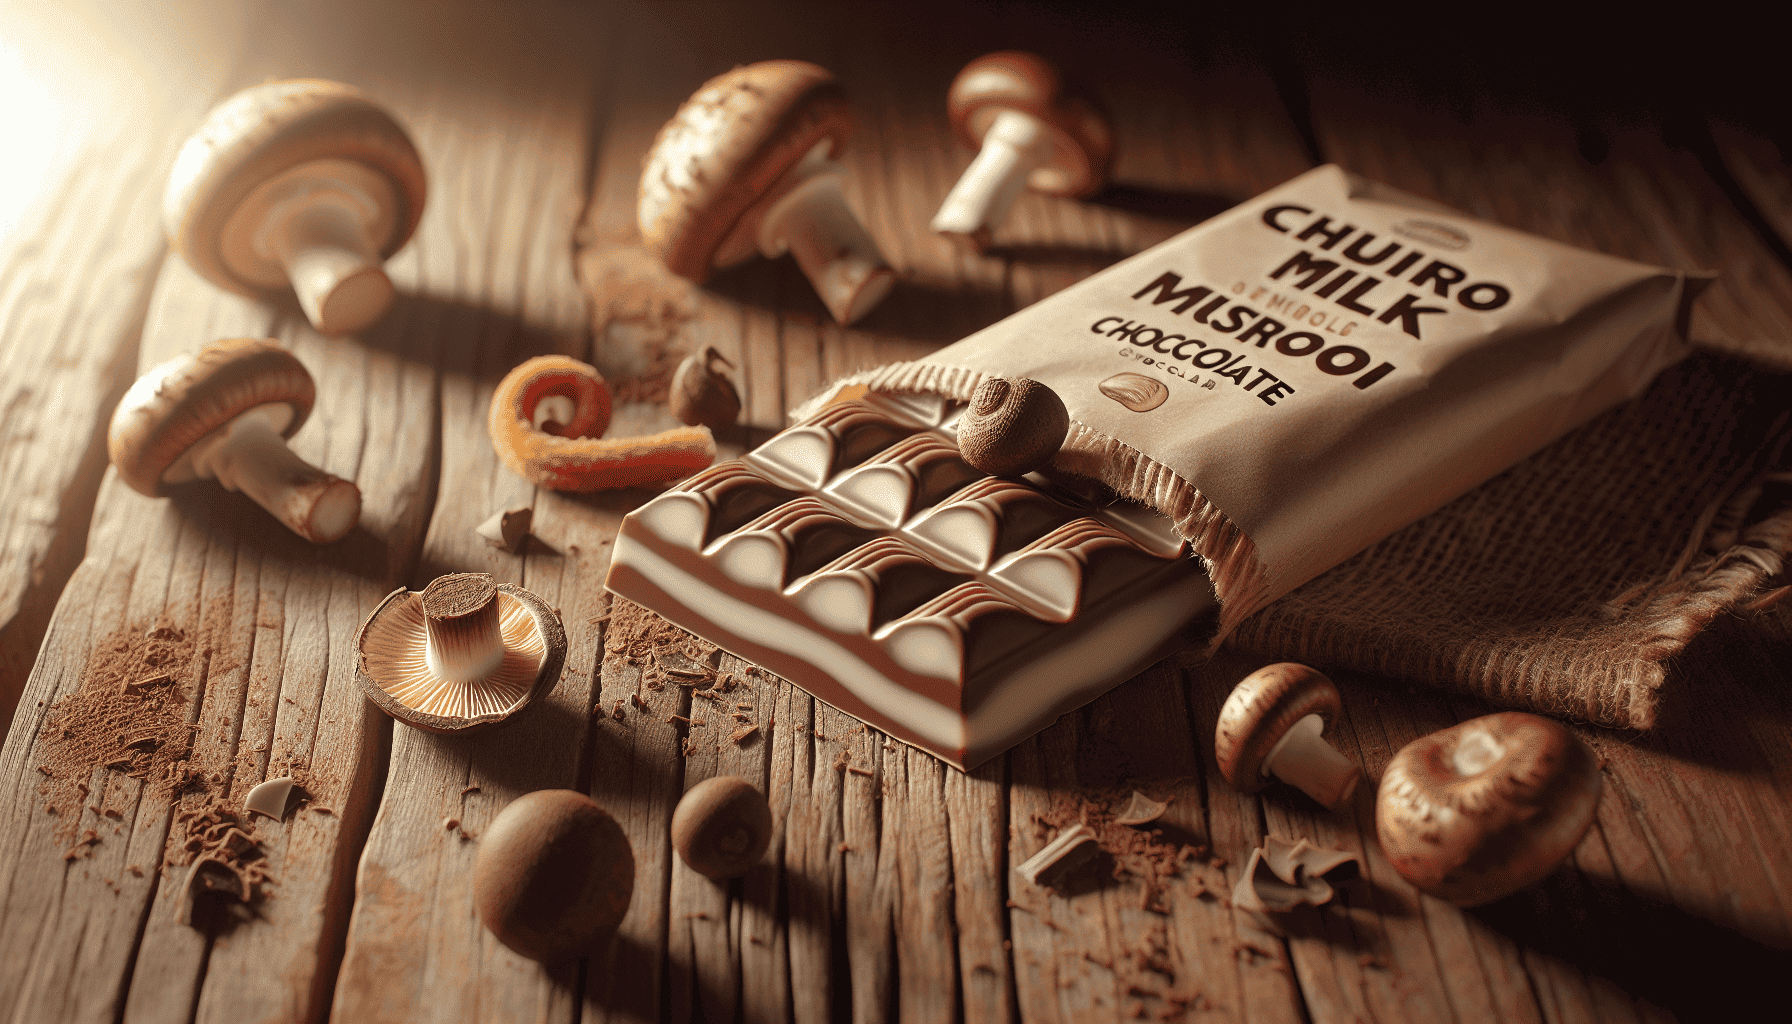 Churro Milk mushroom chocolate bar